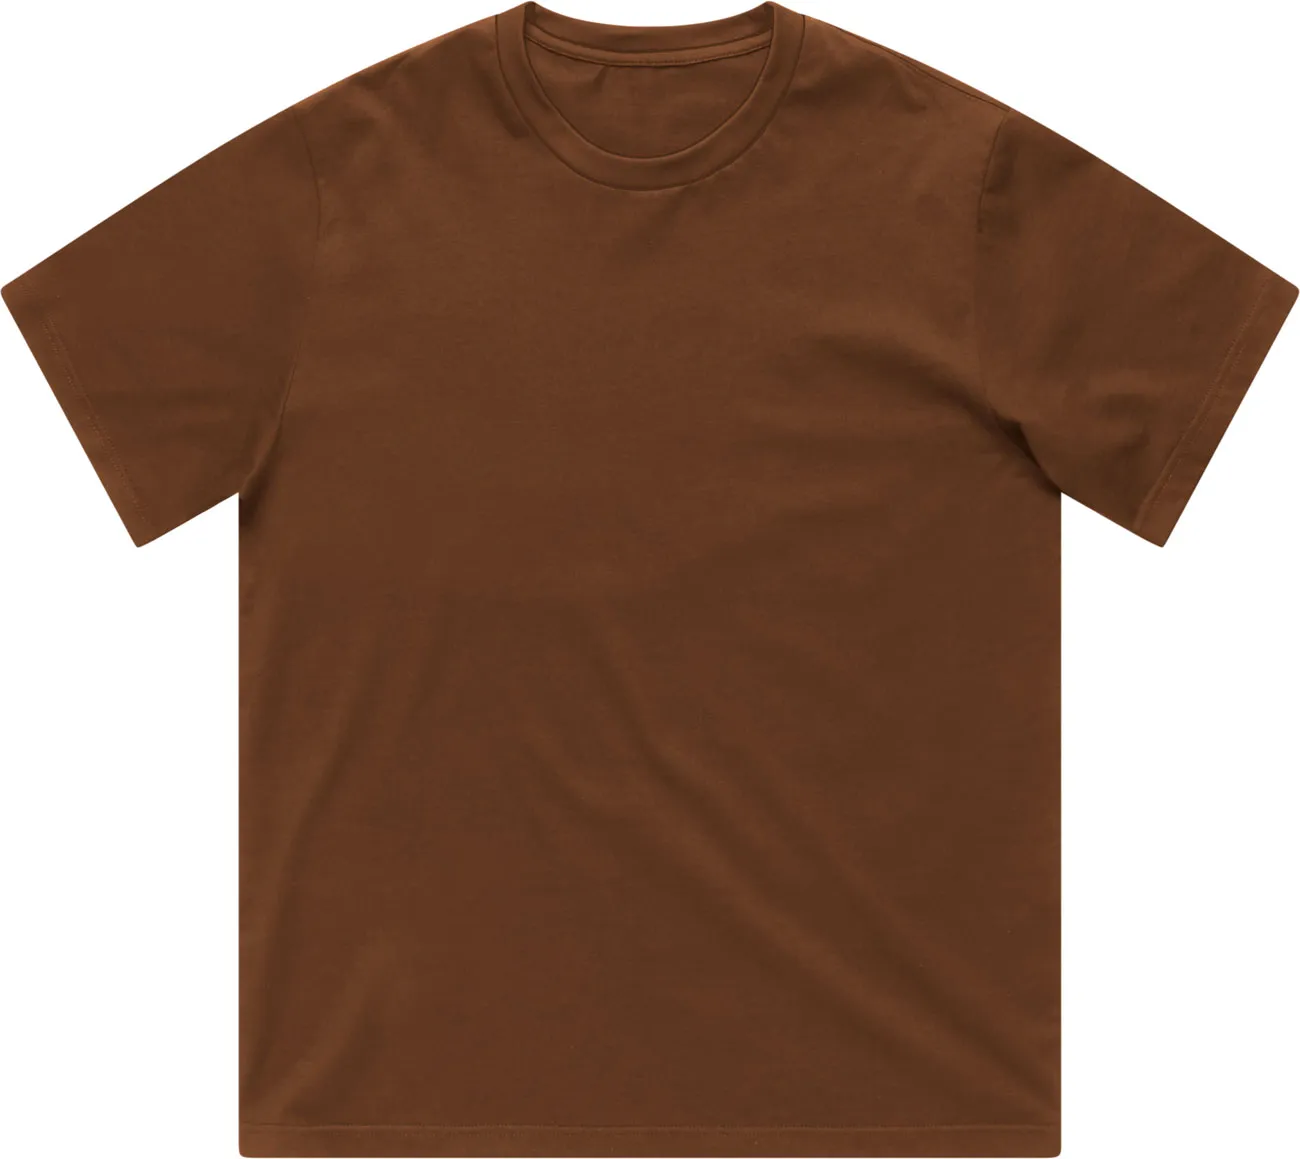 Vintage Industries Devin, t-shirt - Marron - XL